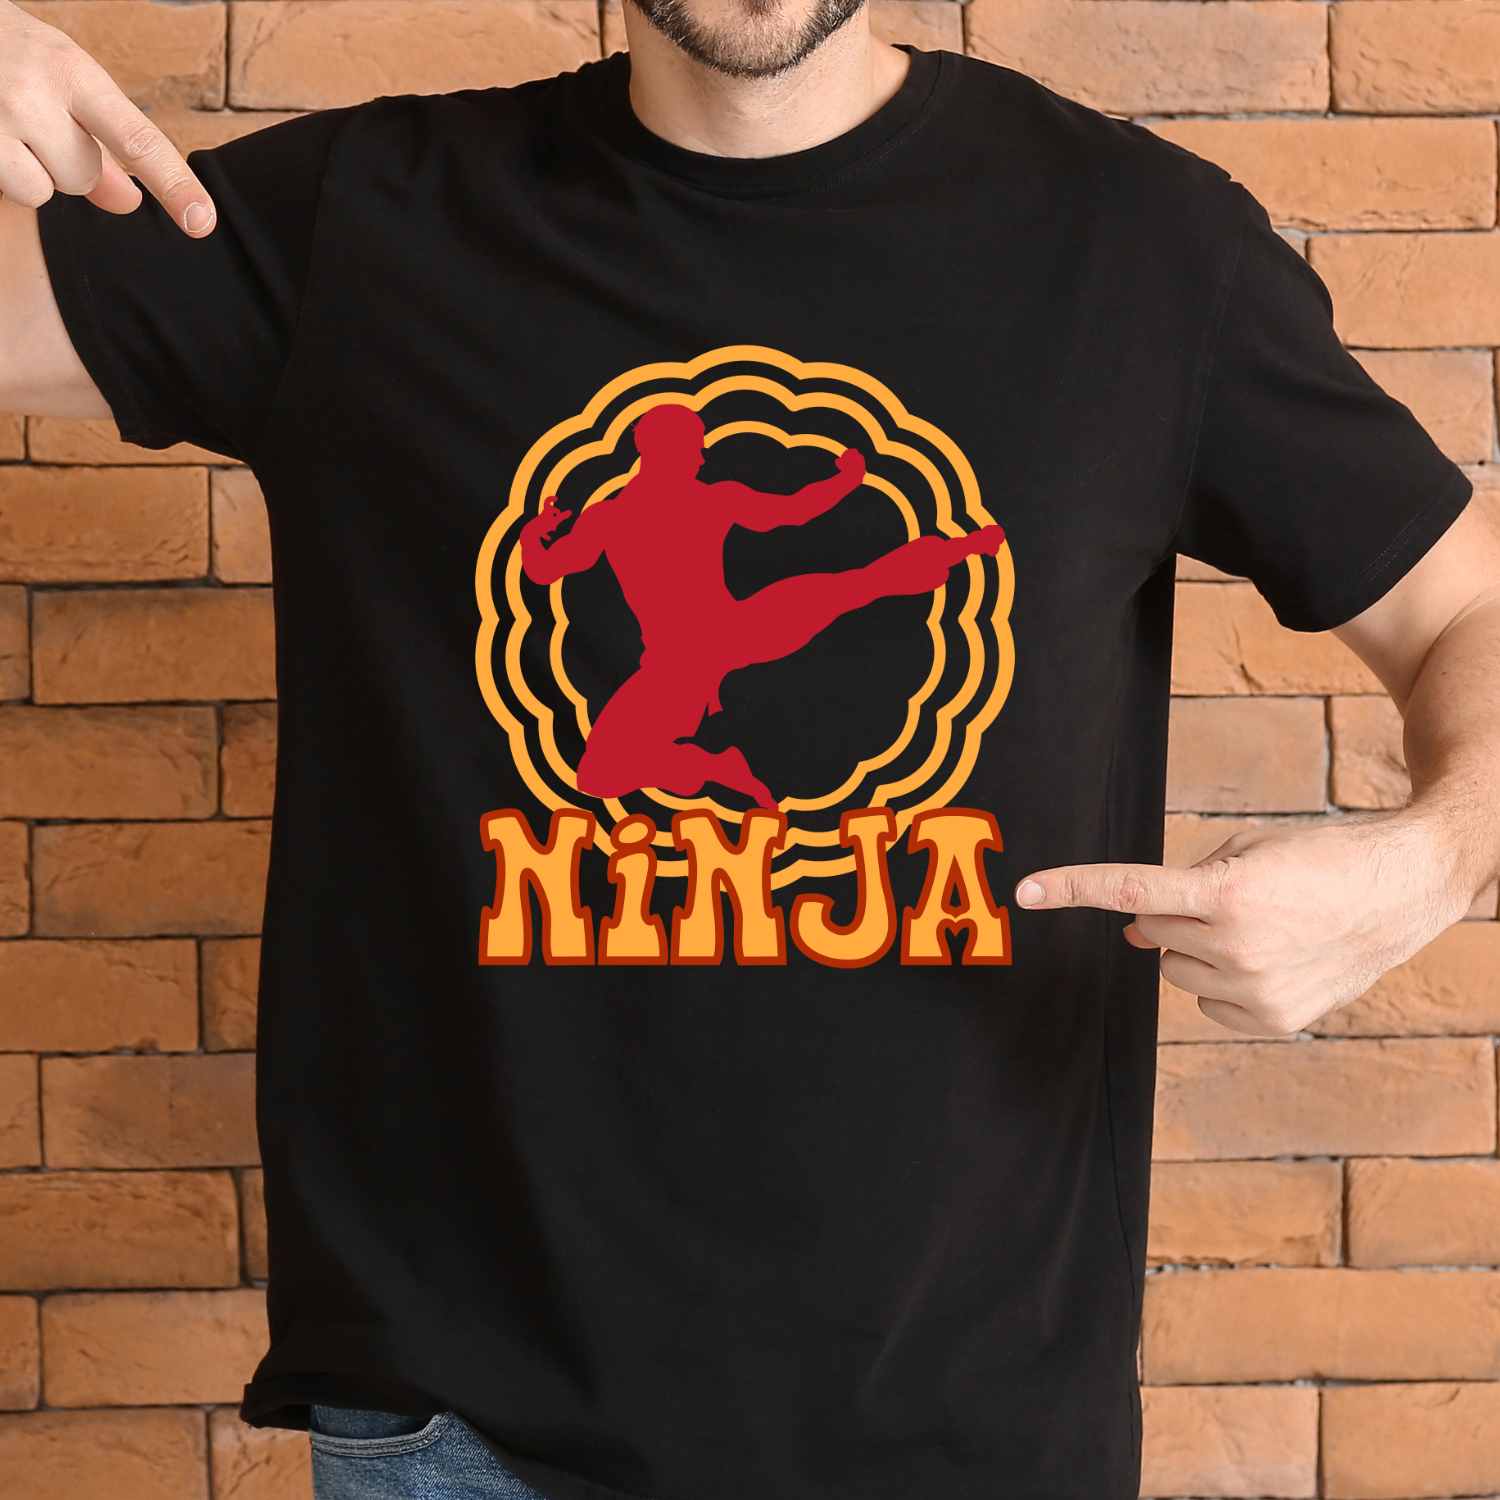 Ninja Action T-shirt Design